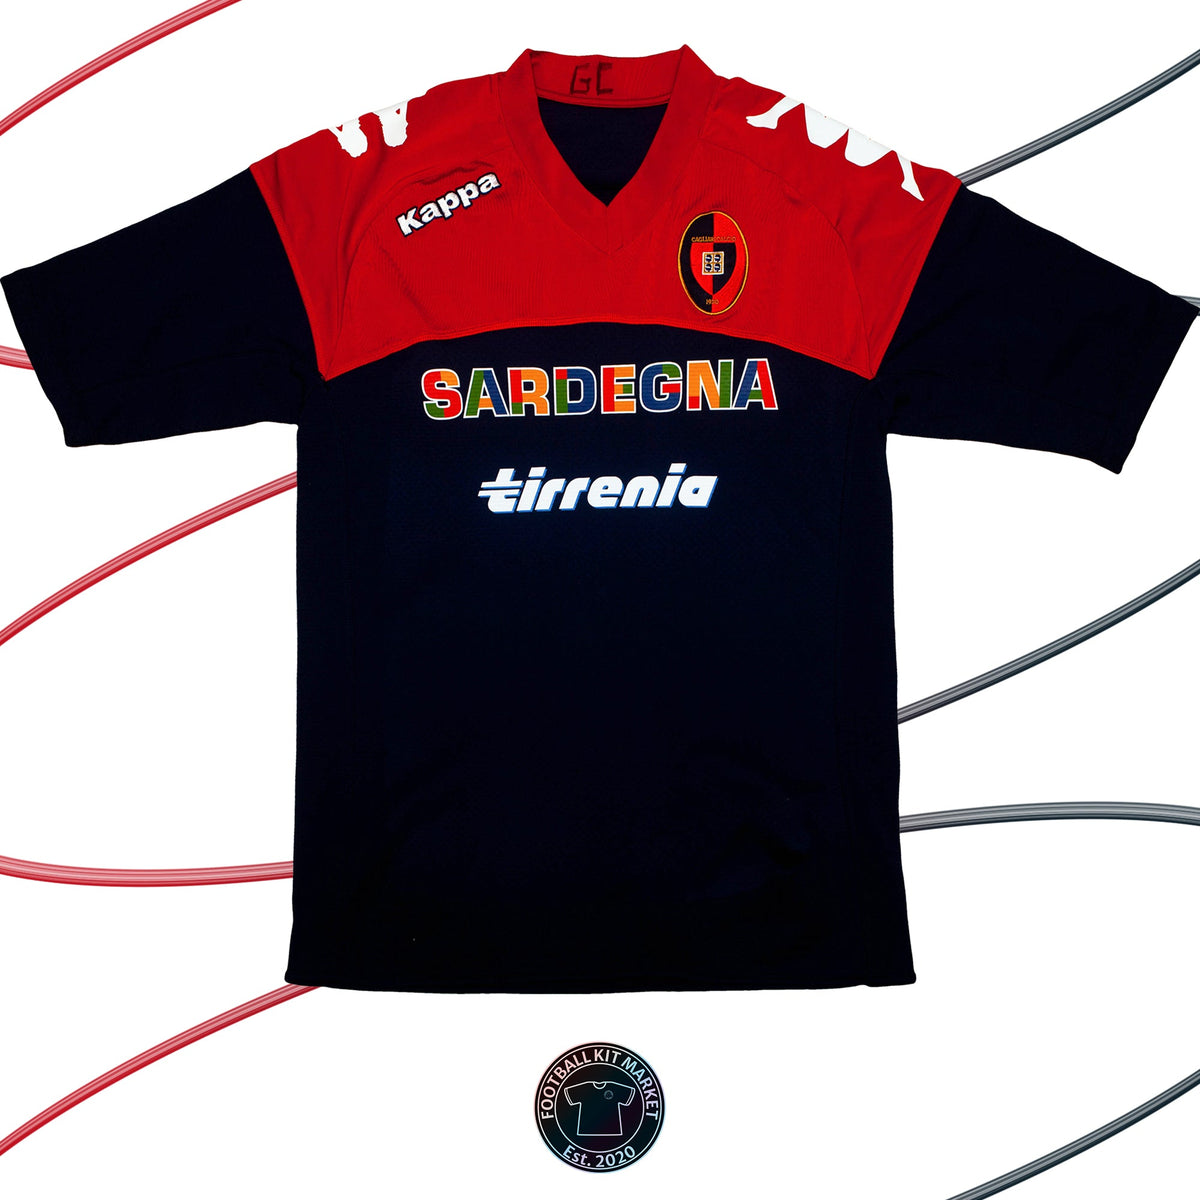 Genuine CAGLIARI Training Shirt (2013-2014) - KAPPA (XL) - Product Image from Football Kit Market